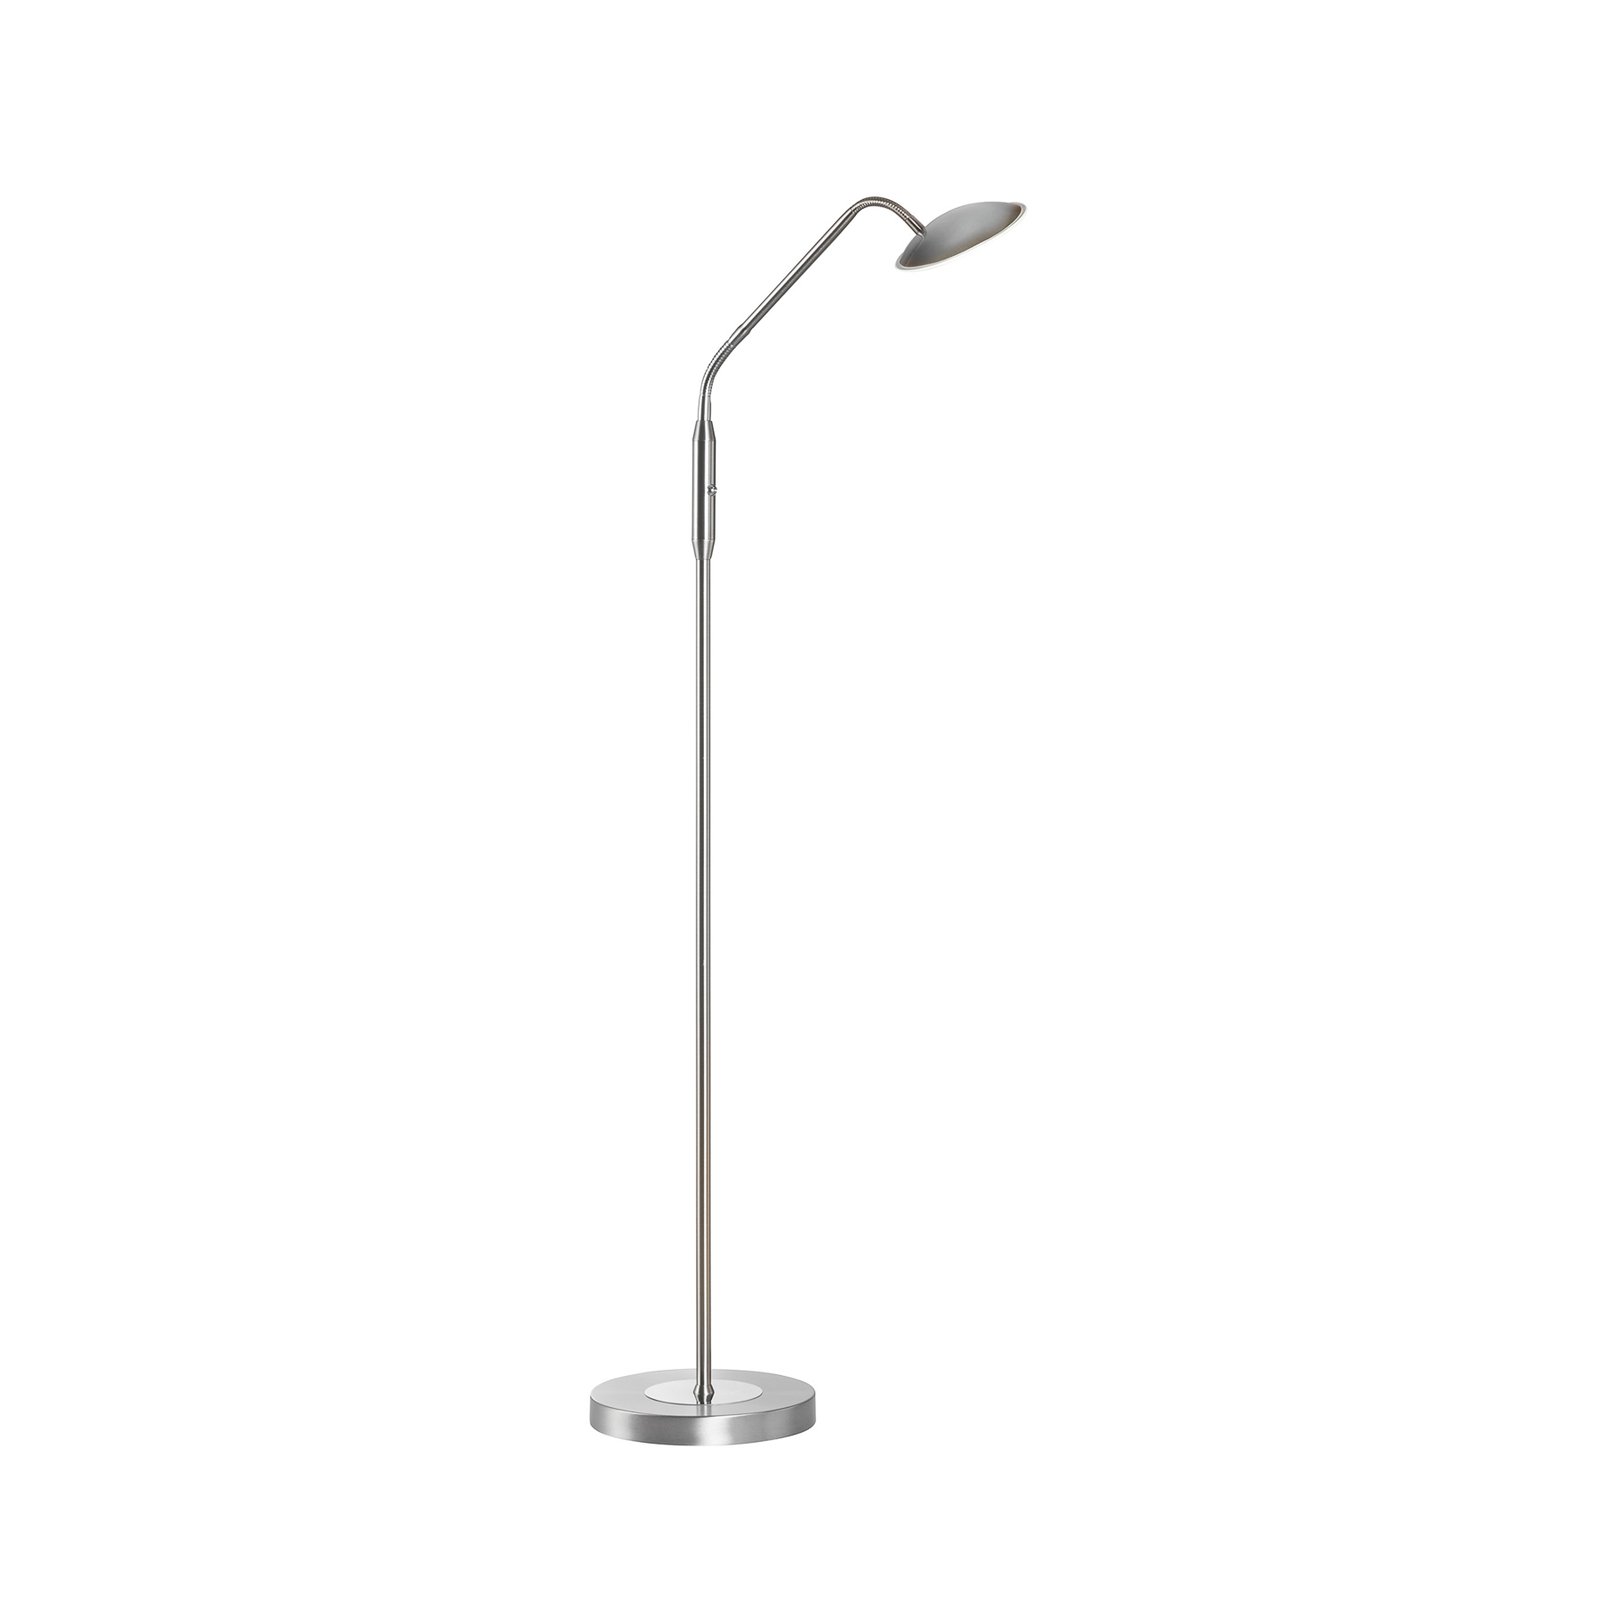 LED floor lamp Tallri, nickel-coloured, height 135 cm, CCT